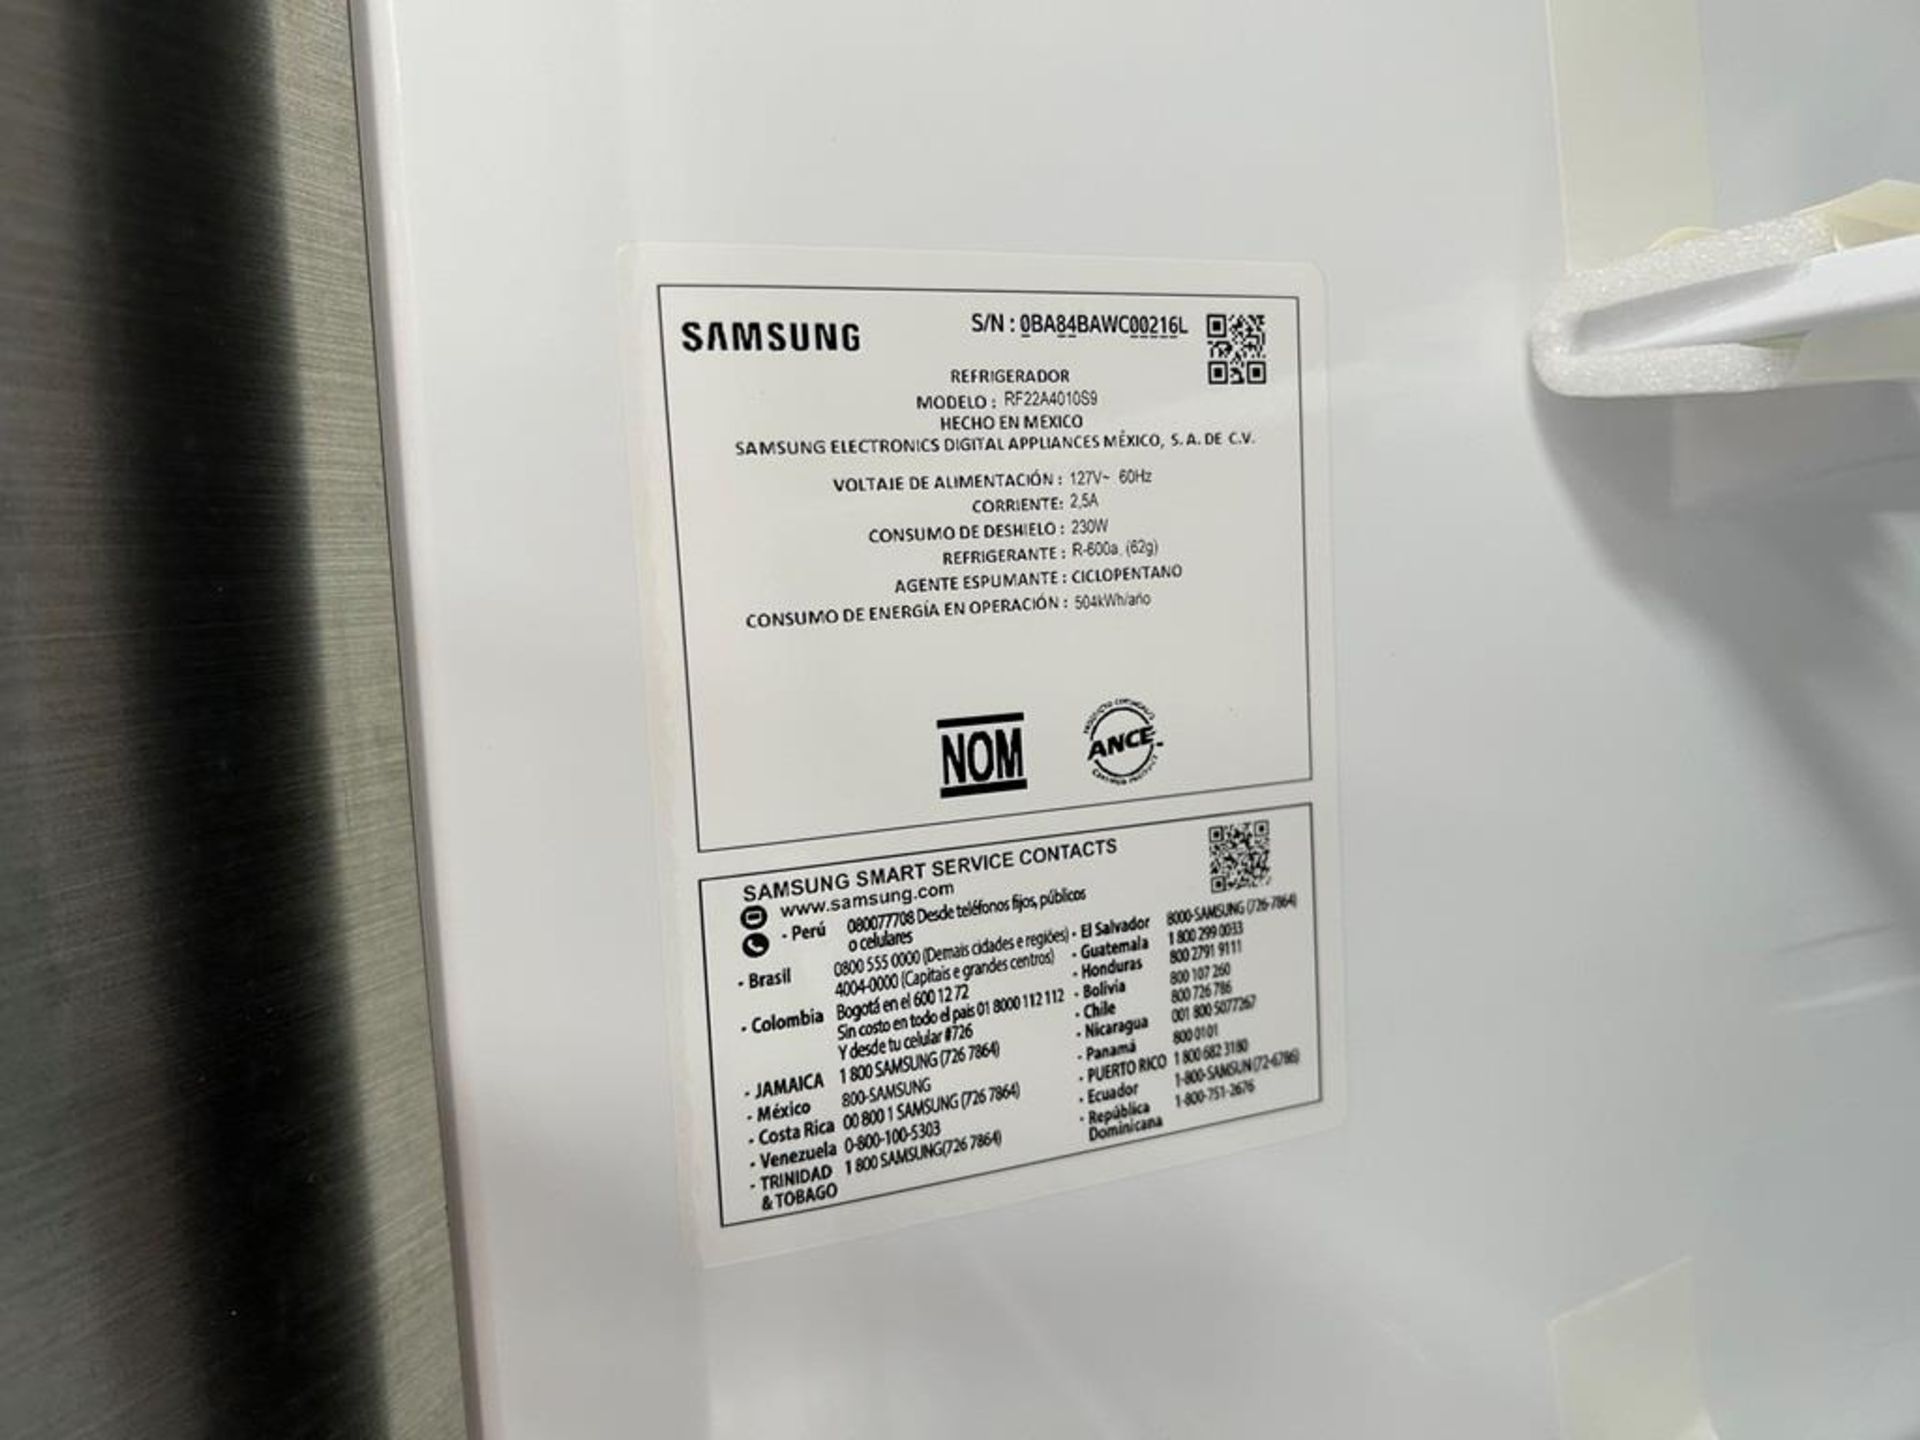 (NUEVO) Refrigerador Marca SAMSUNG, Modelo RF22A4010S9, Serie 00216L, Color GRIS - Image 9 of 11